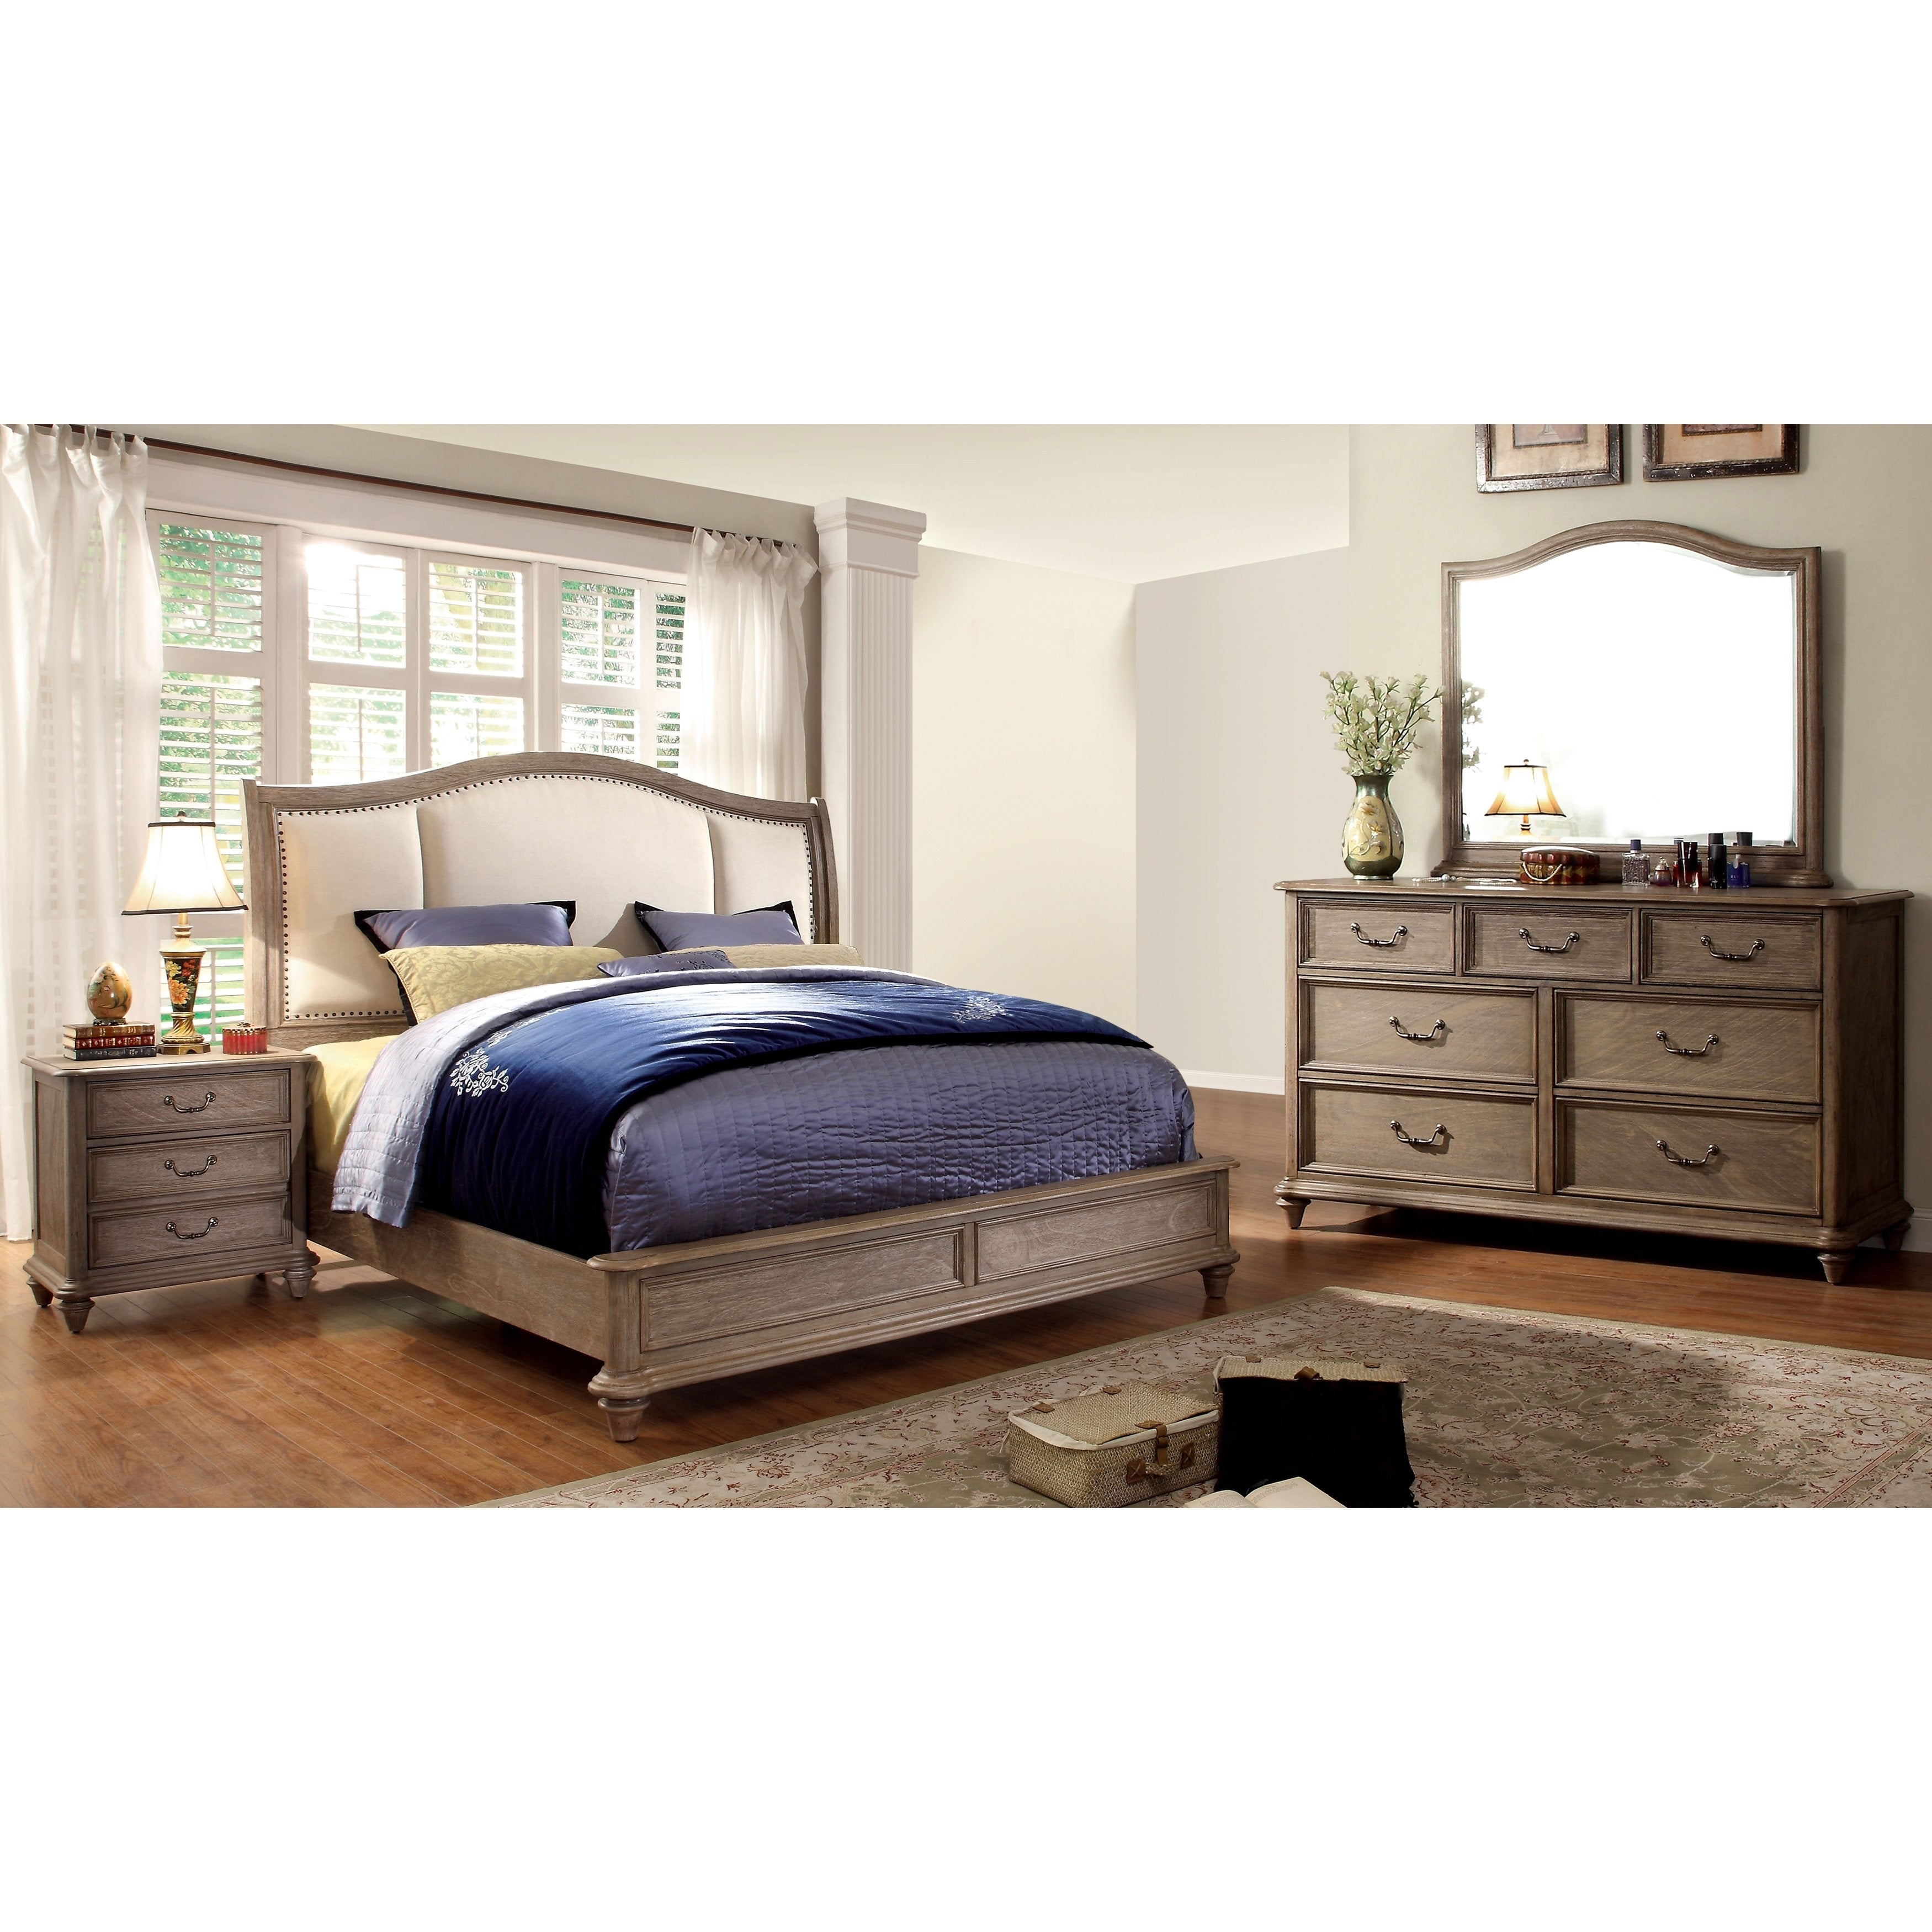 Furniture Of America Minka Ii Rustic Natural Tone 4 Piece Bedroom Set in size 3500 X 3500